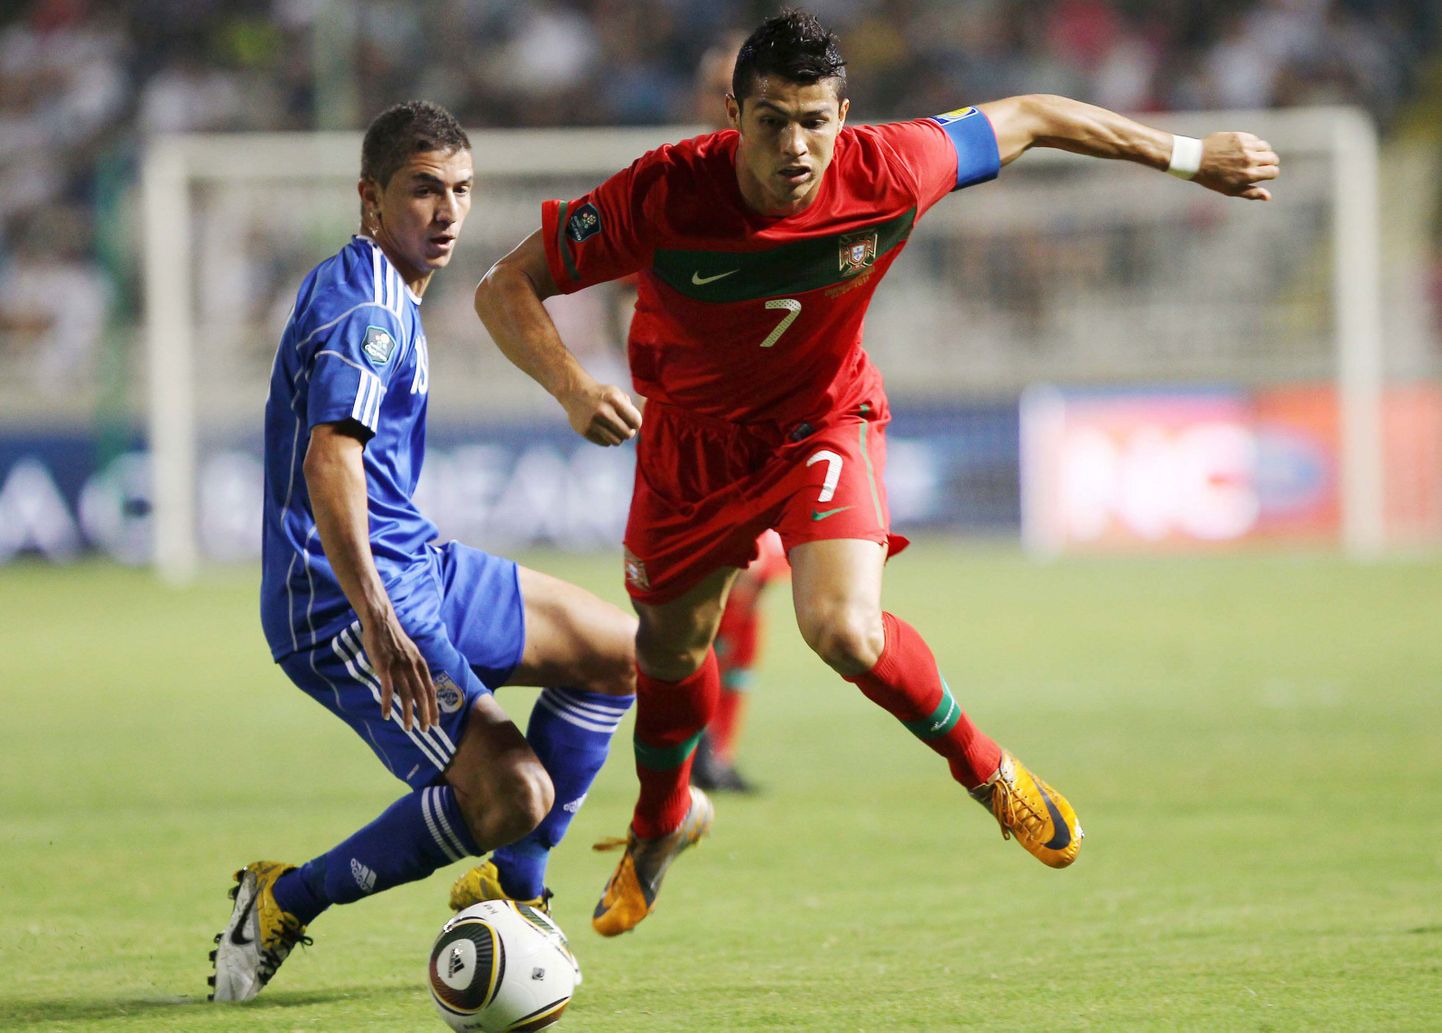 Küprose mängija Dimitris Christofi (vasakul) ei suuda takistada Cristiano Ronaldot.